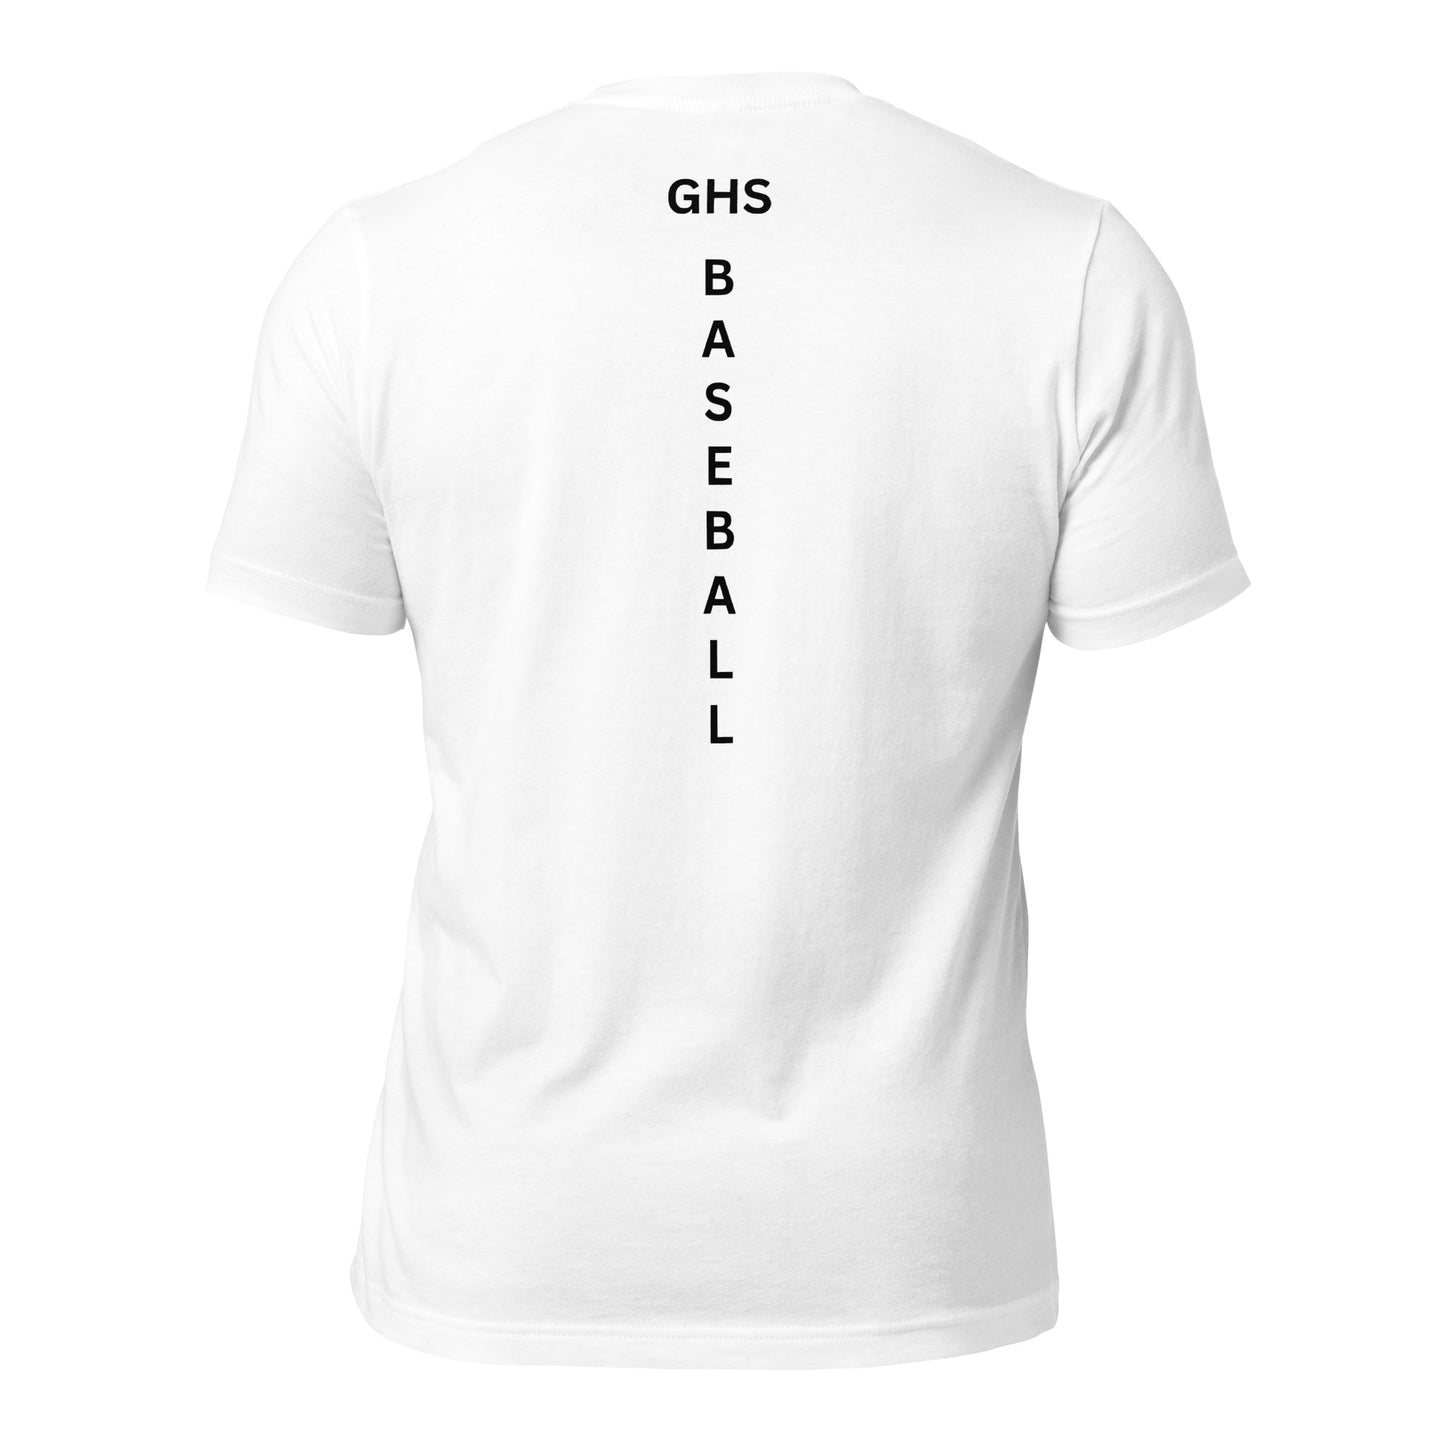 GHS Baseball T-shirt